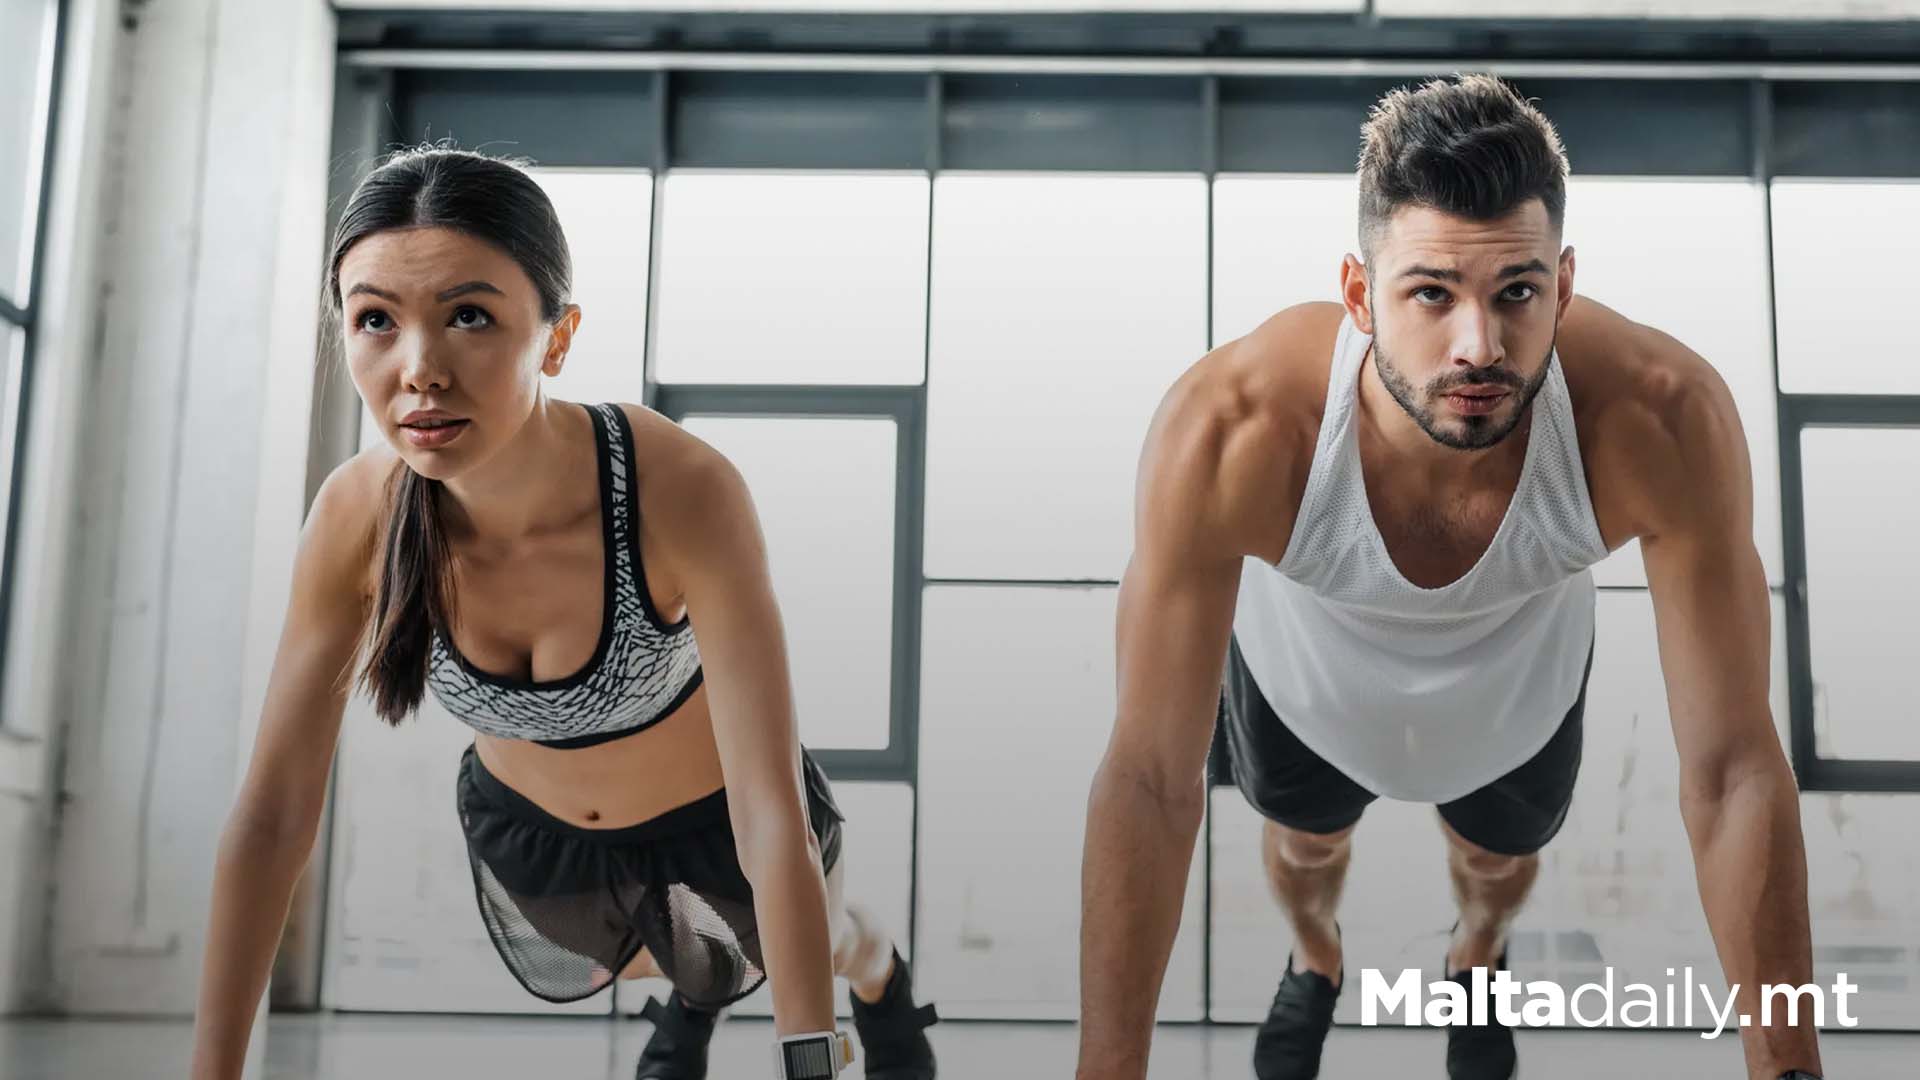 Women Need Less Exercise Than Men To Gain Health Benefits, Study